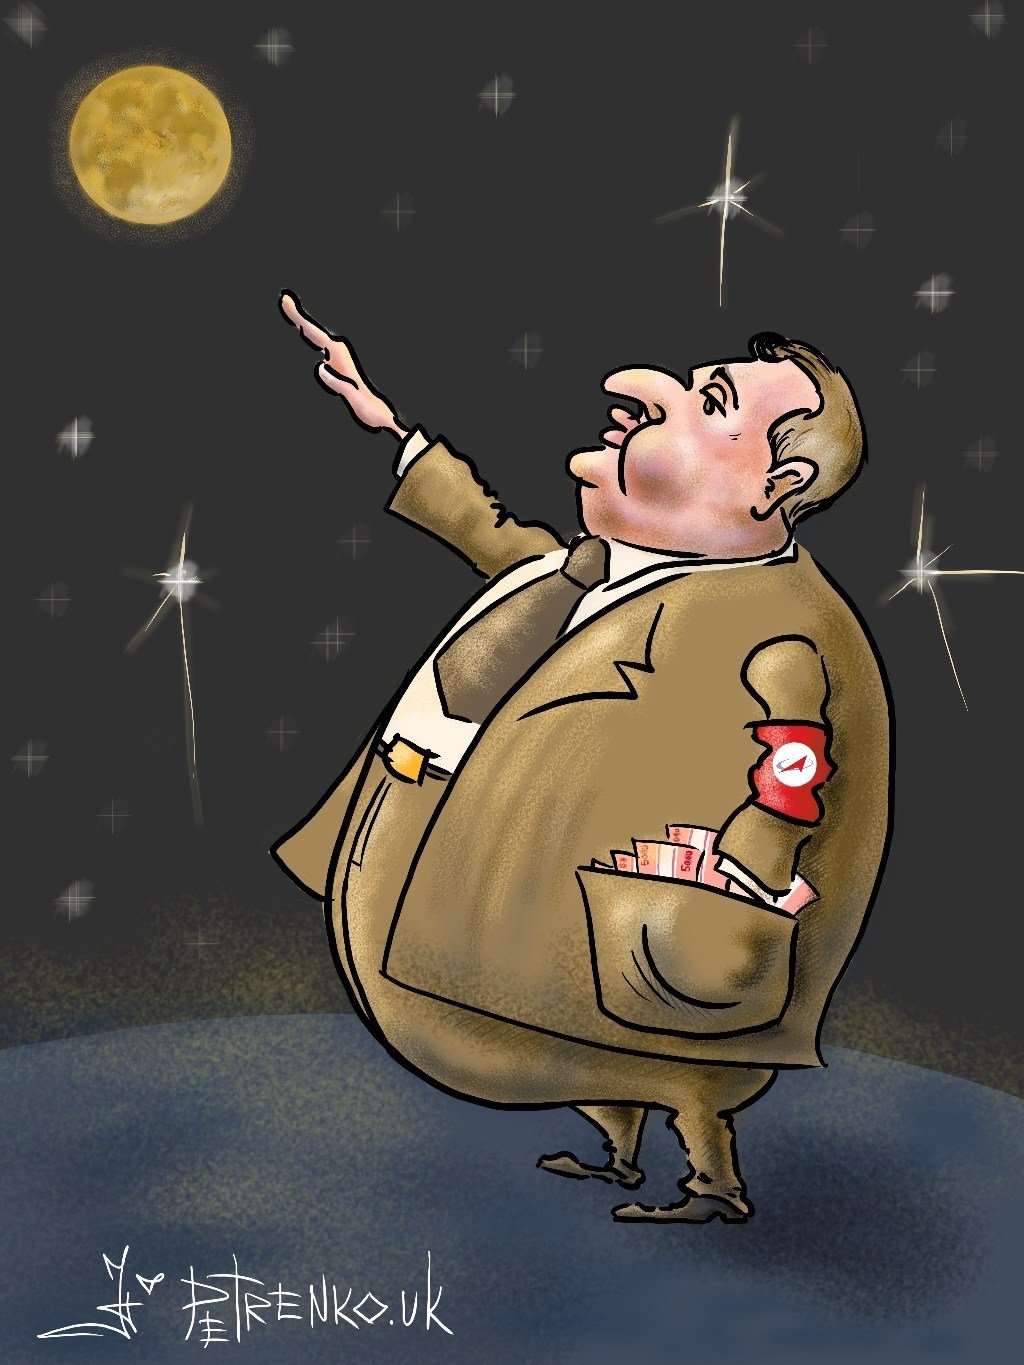 Дмитрий Рогозин карикатуры